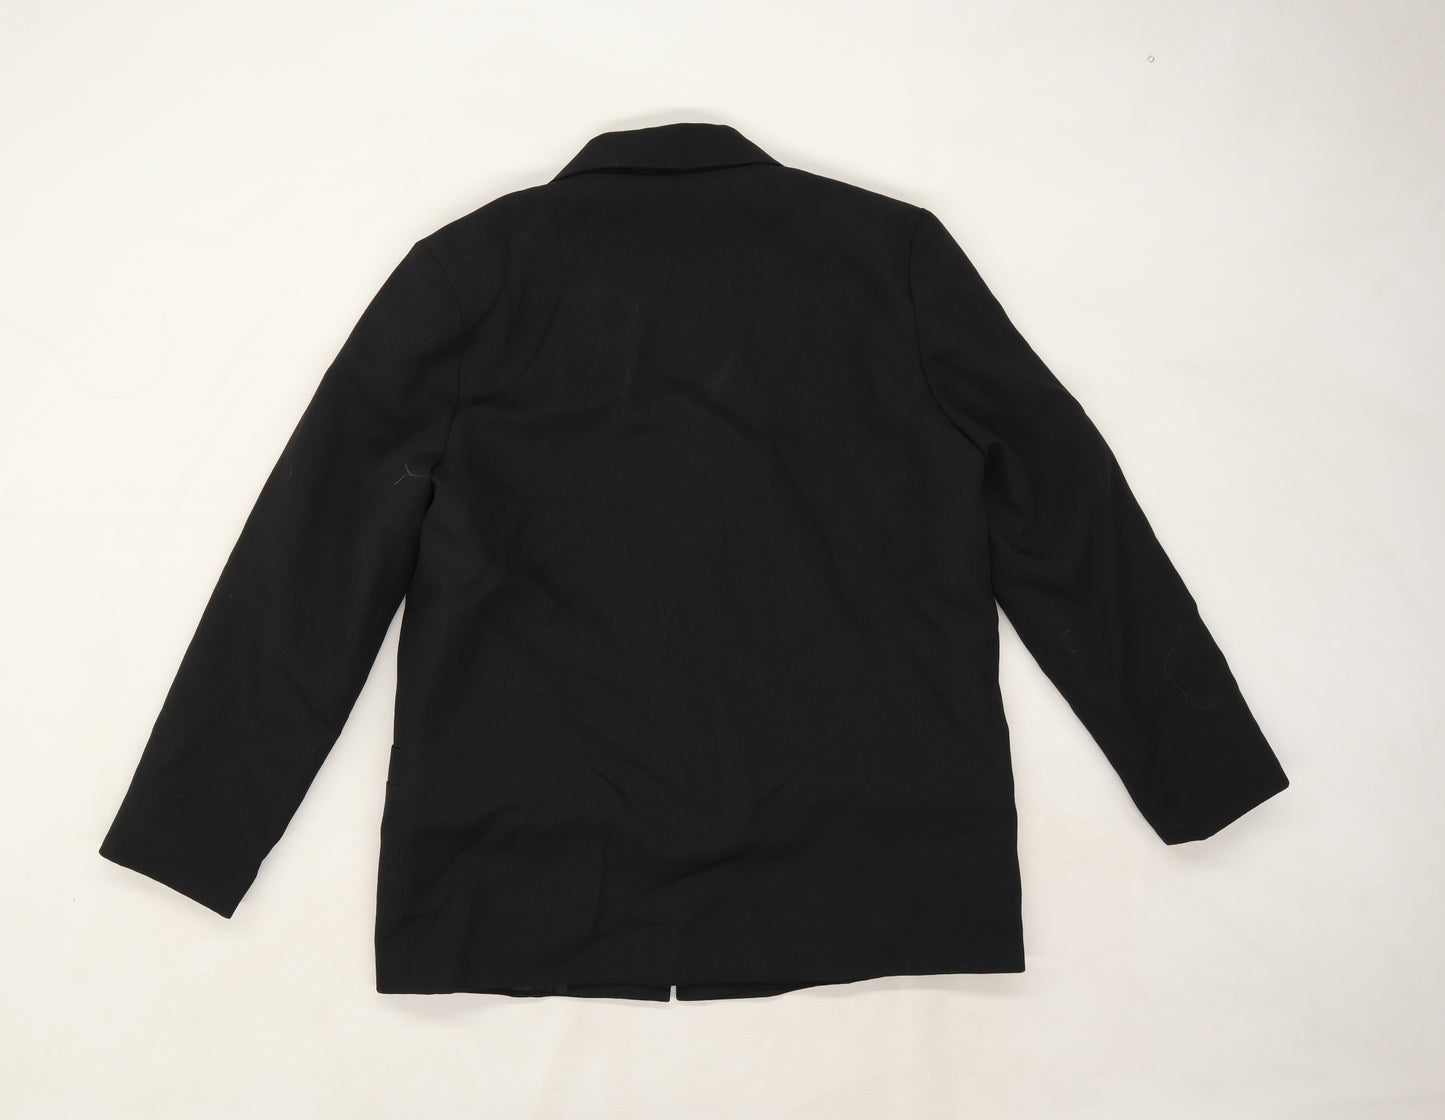 Debenhams Womens Black  Rayon Jacket Blazer Size 14